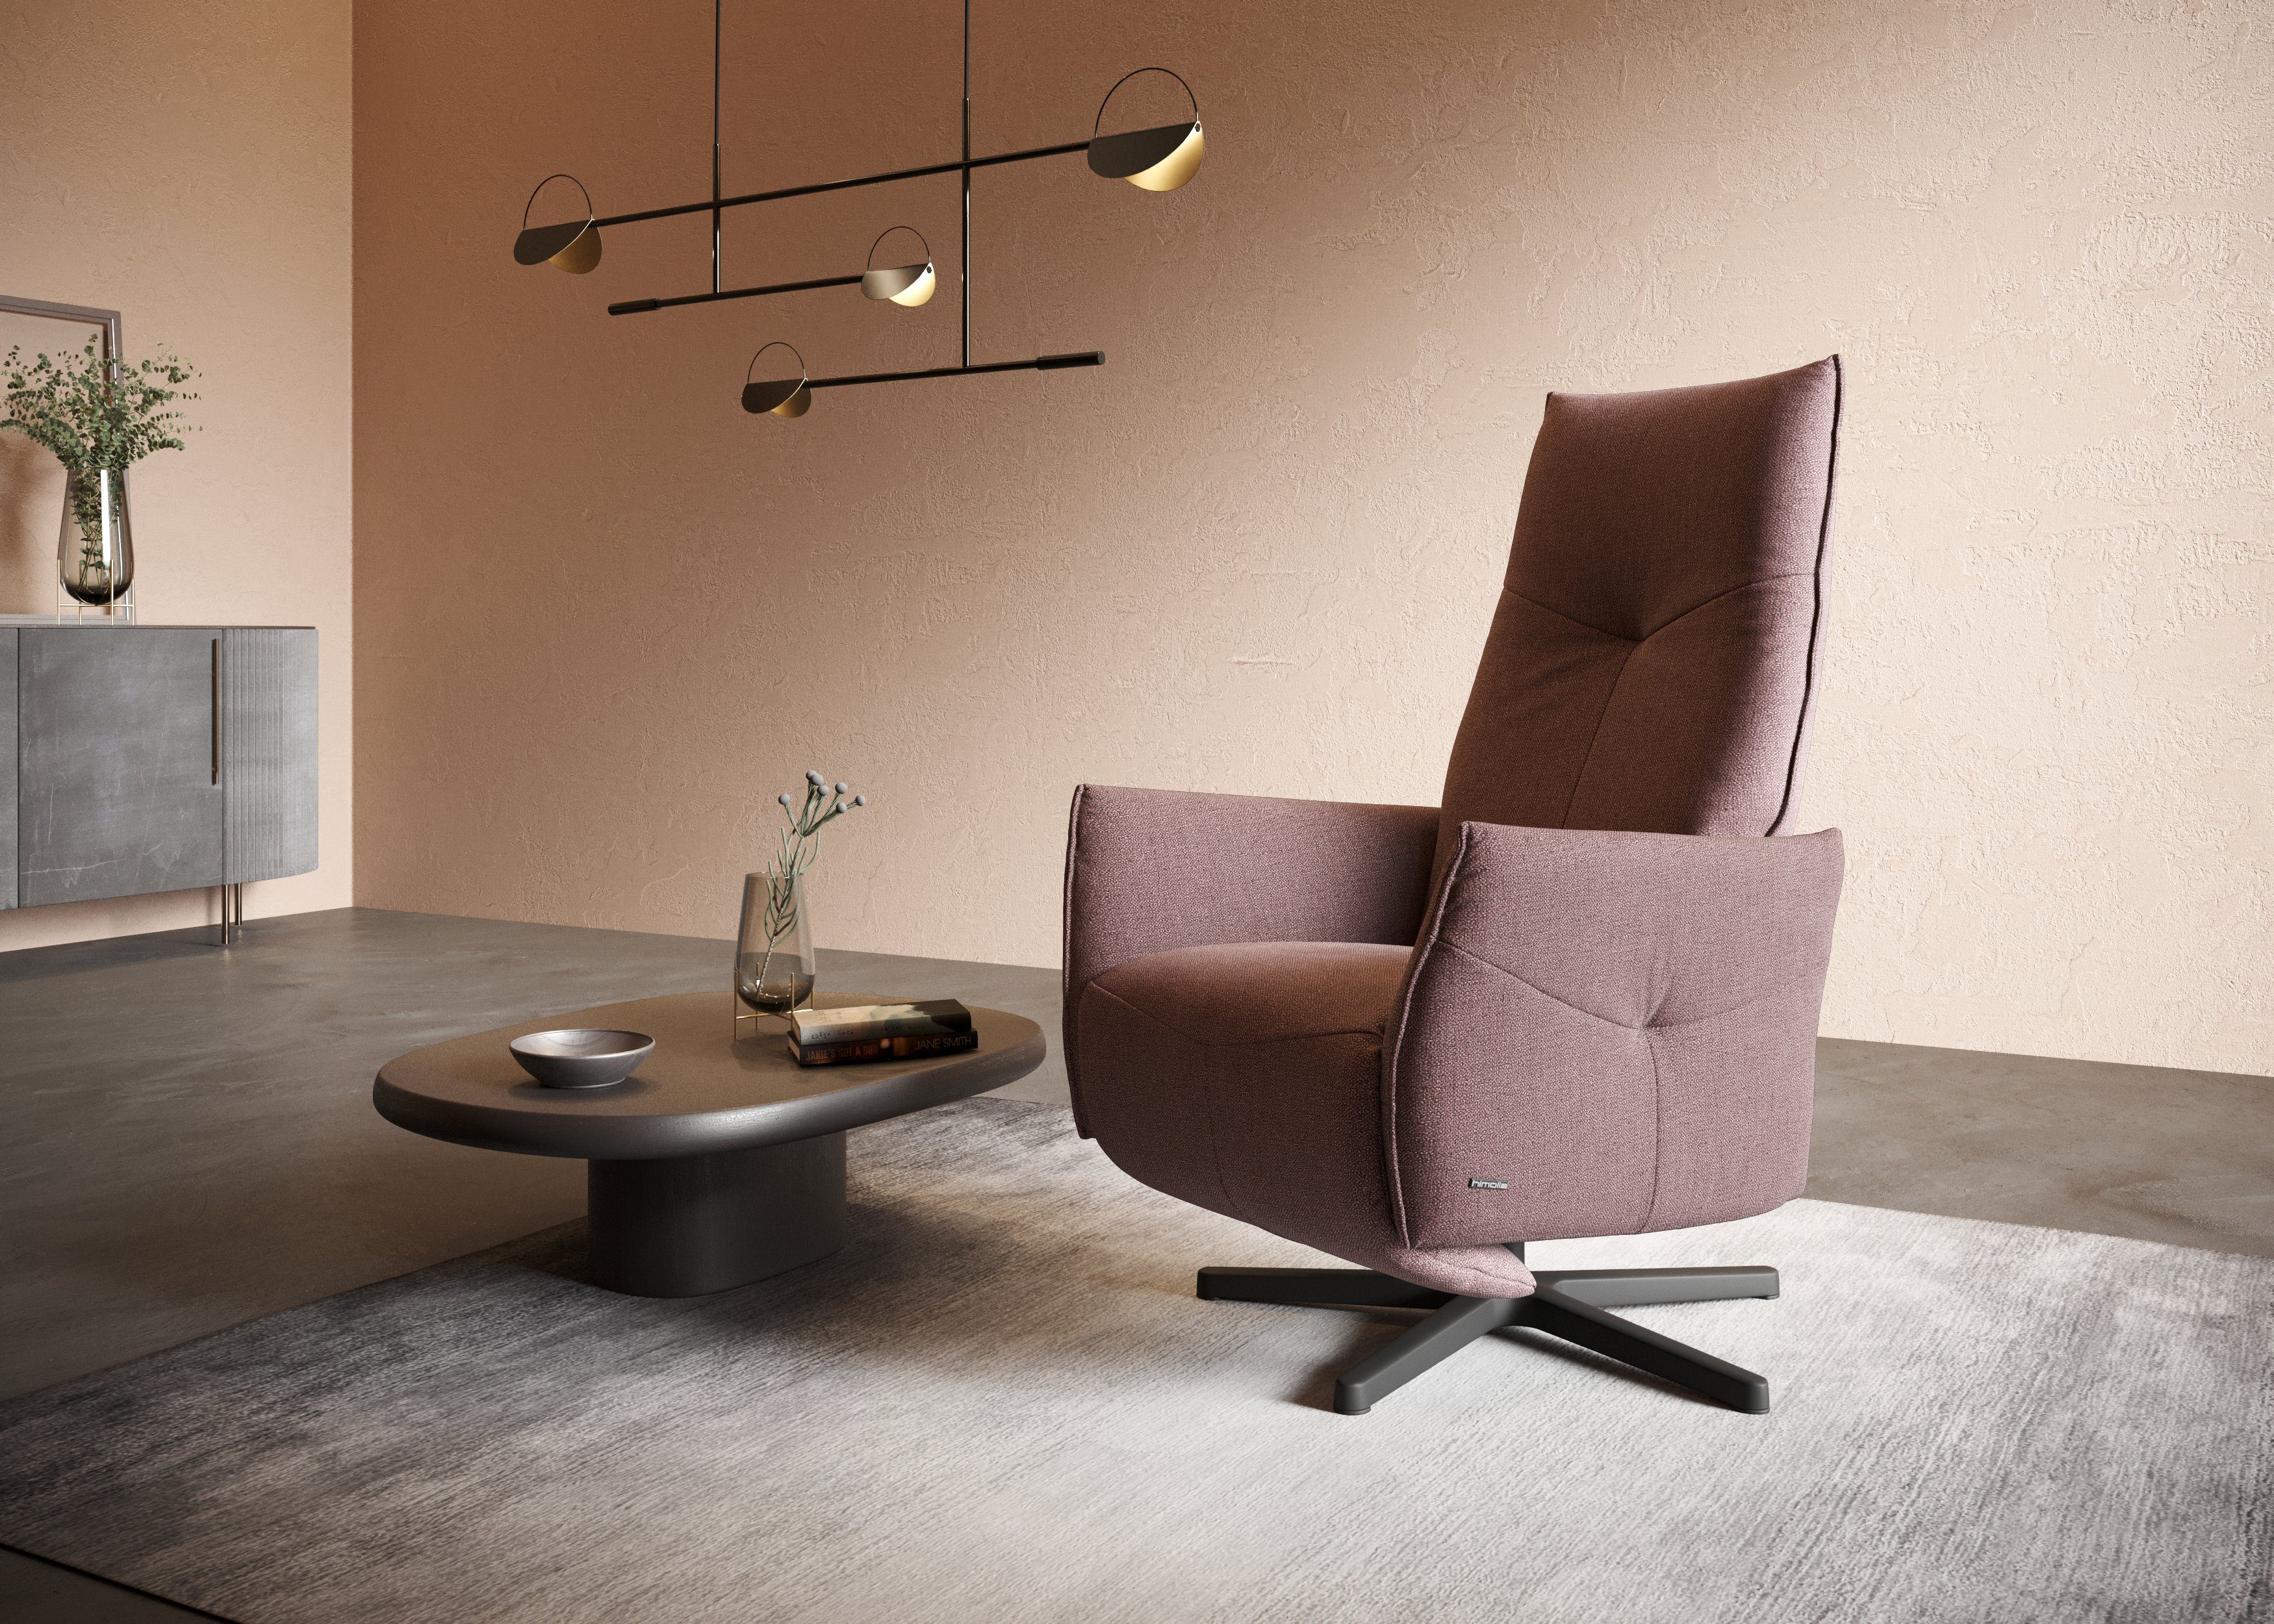 himolla Relaxsessel himolla 9920, Fußfarbe in edelstahloptik, wahlweise manuell oder elektrisch | Sessel